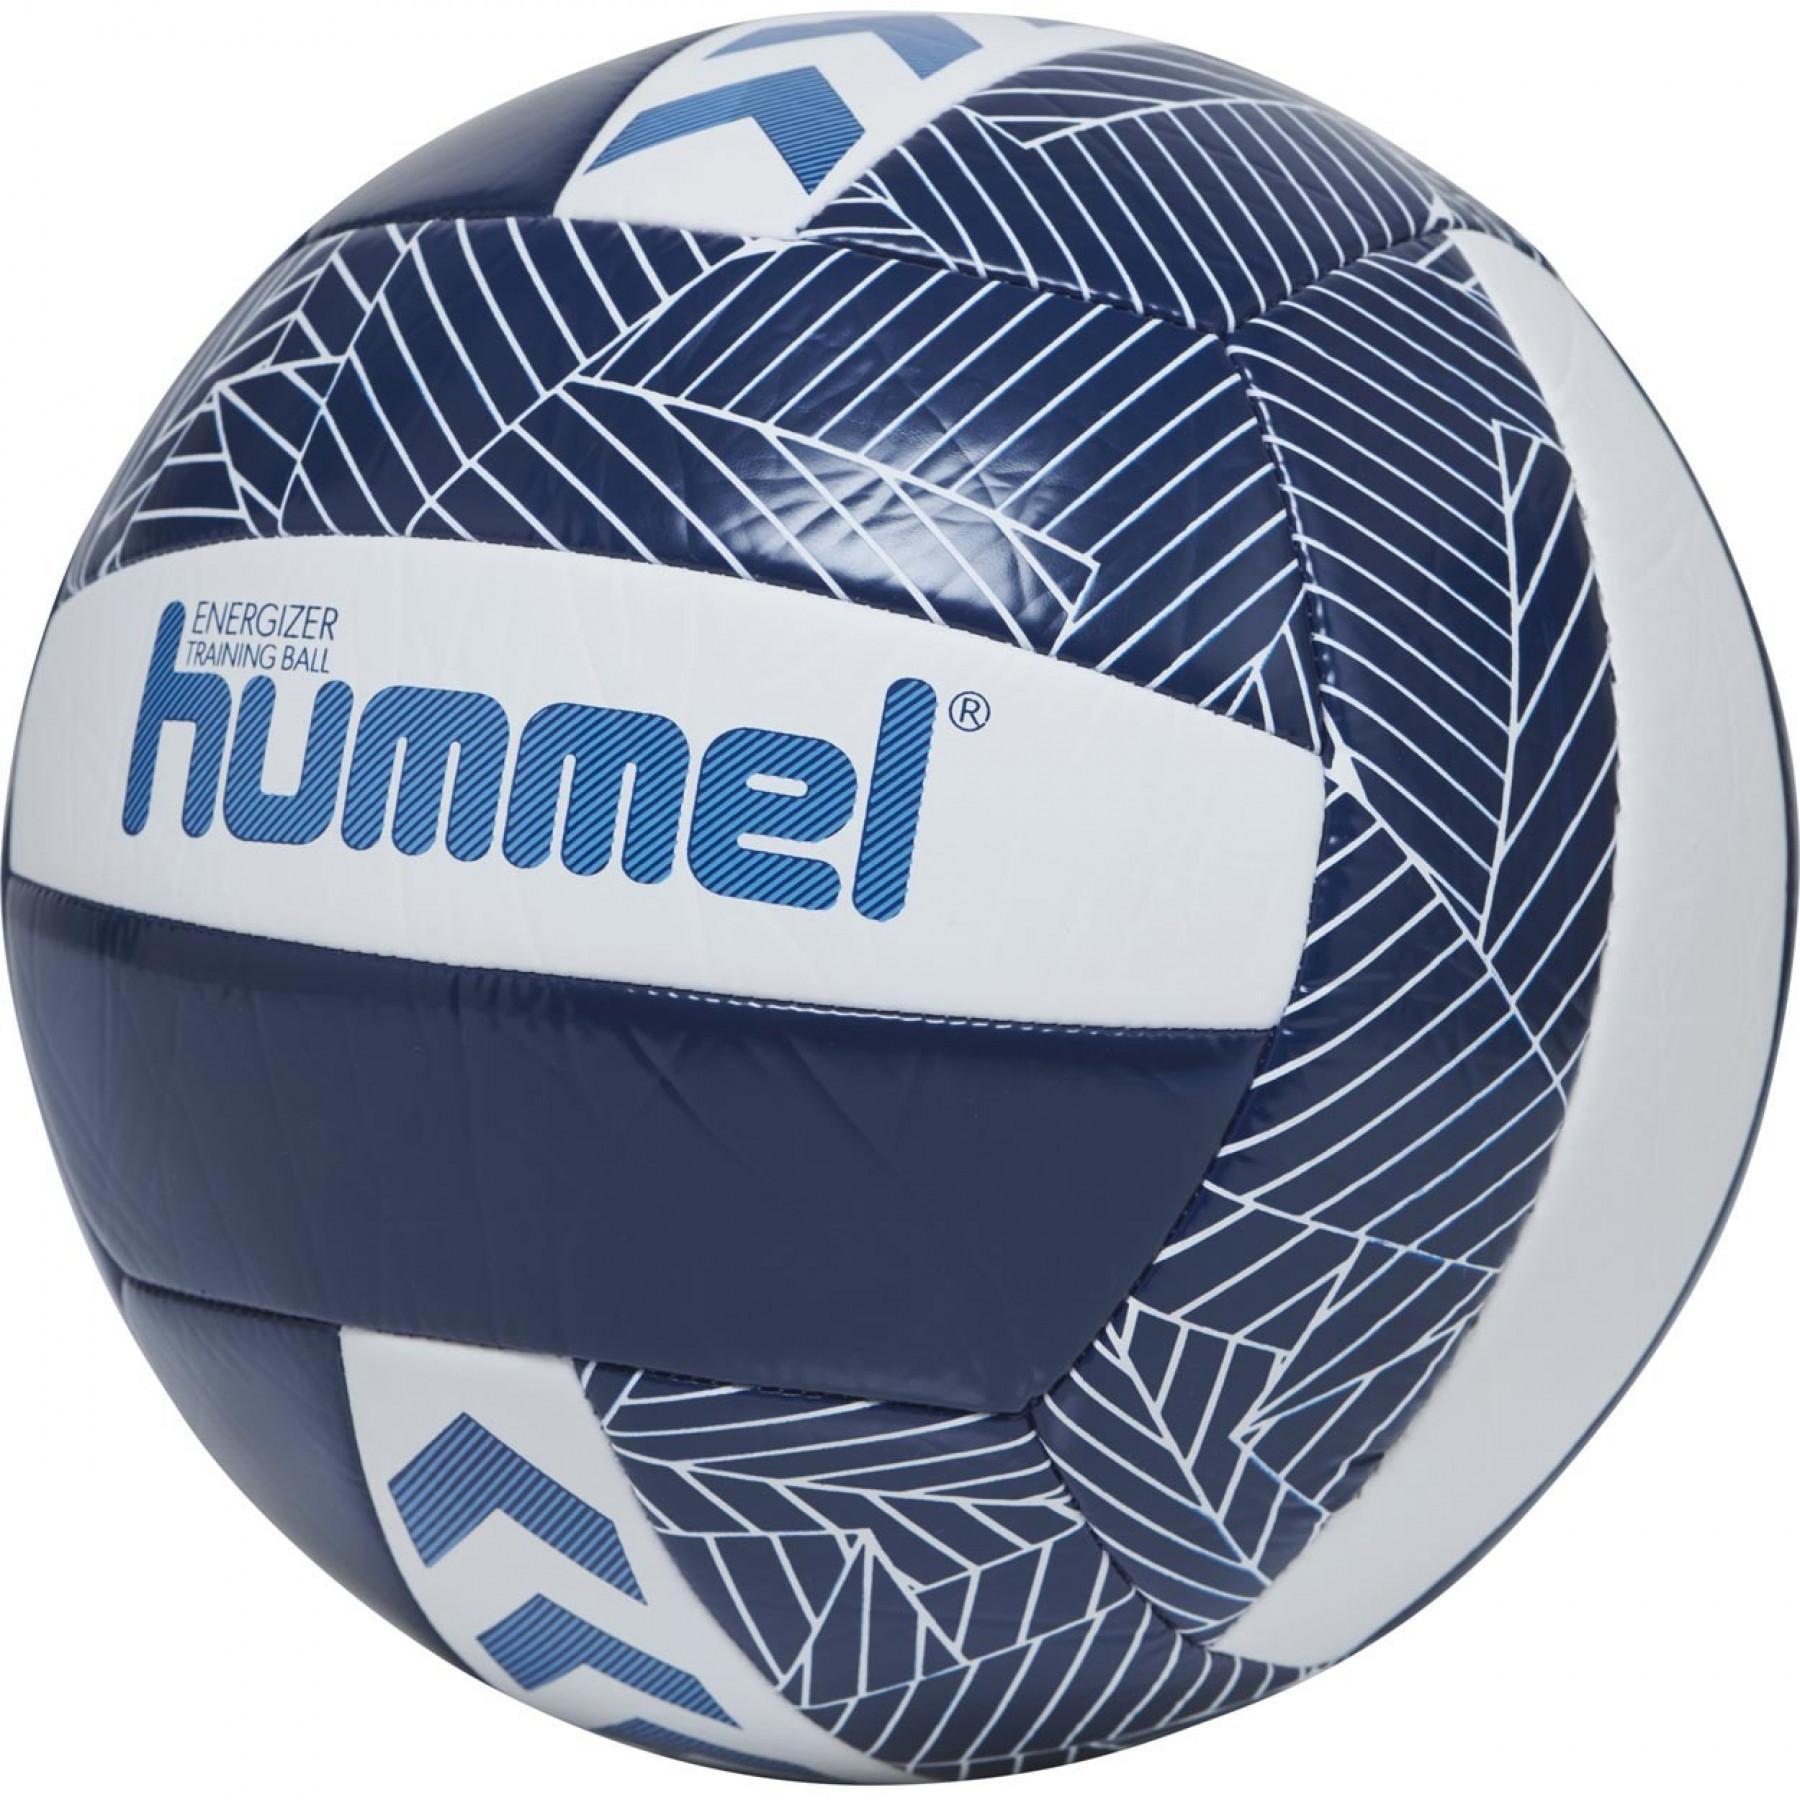 Juego de 3 balones de voleibol Hummel Energizer [Taille5]